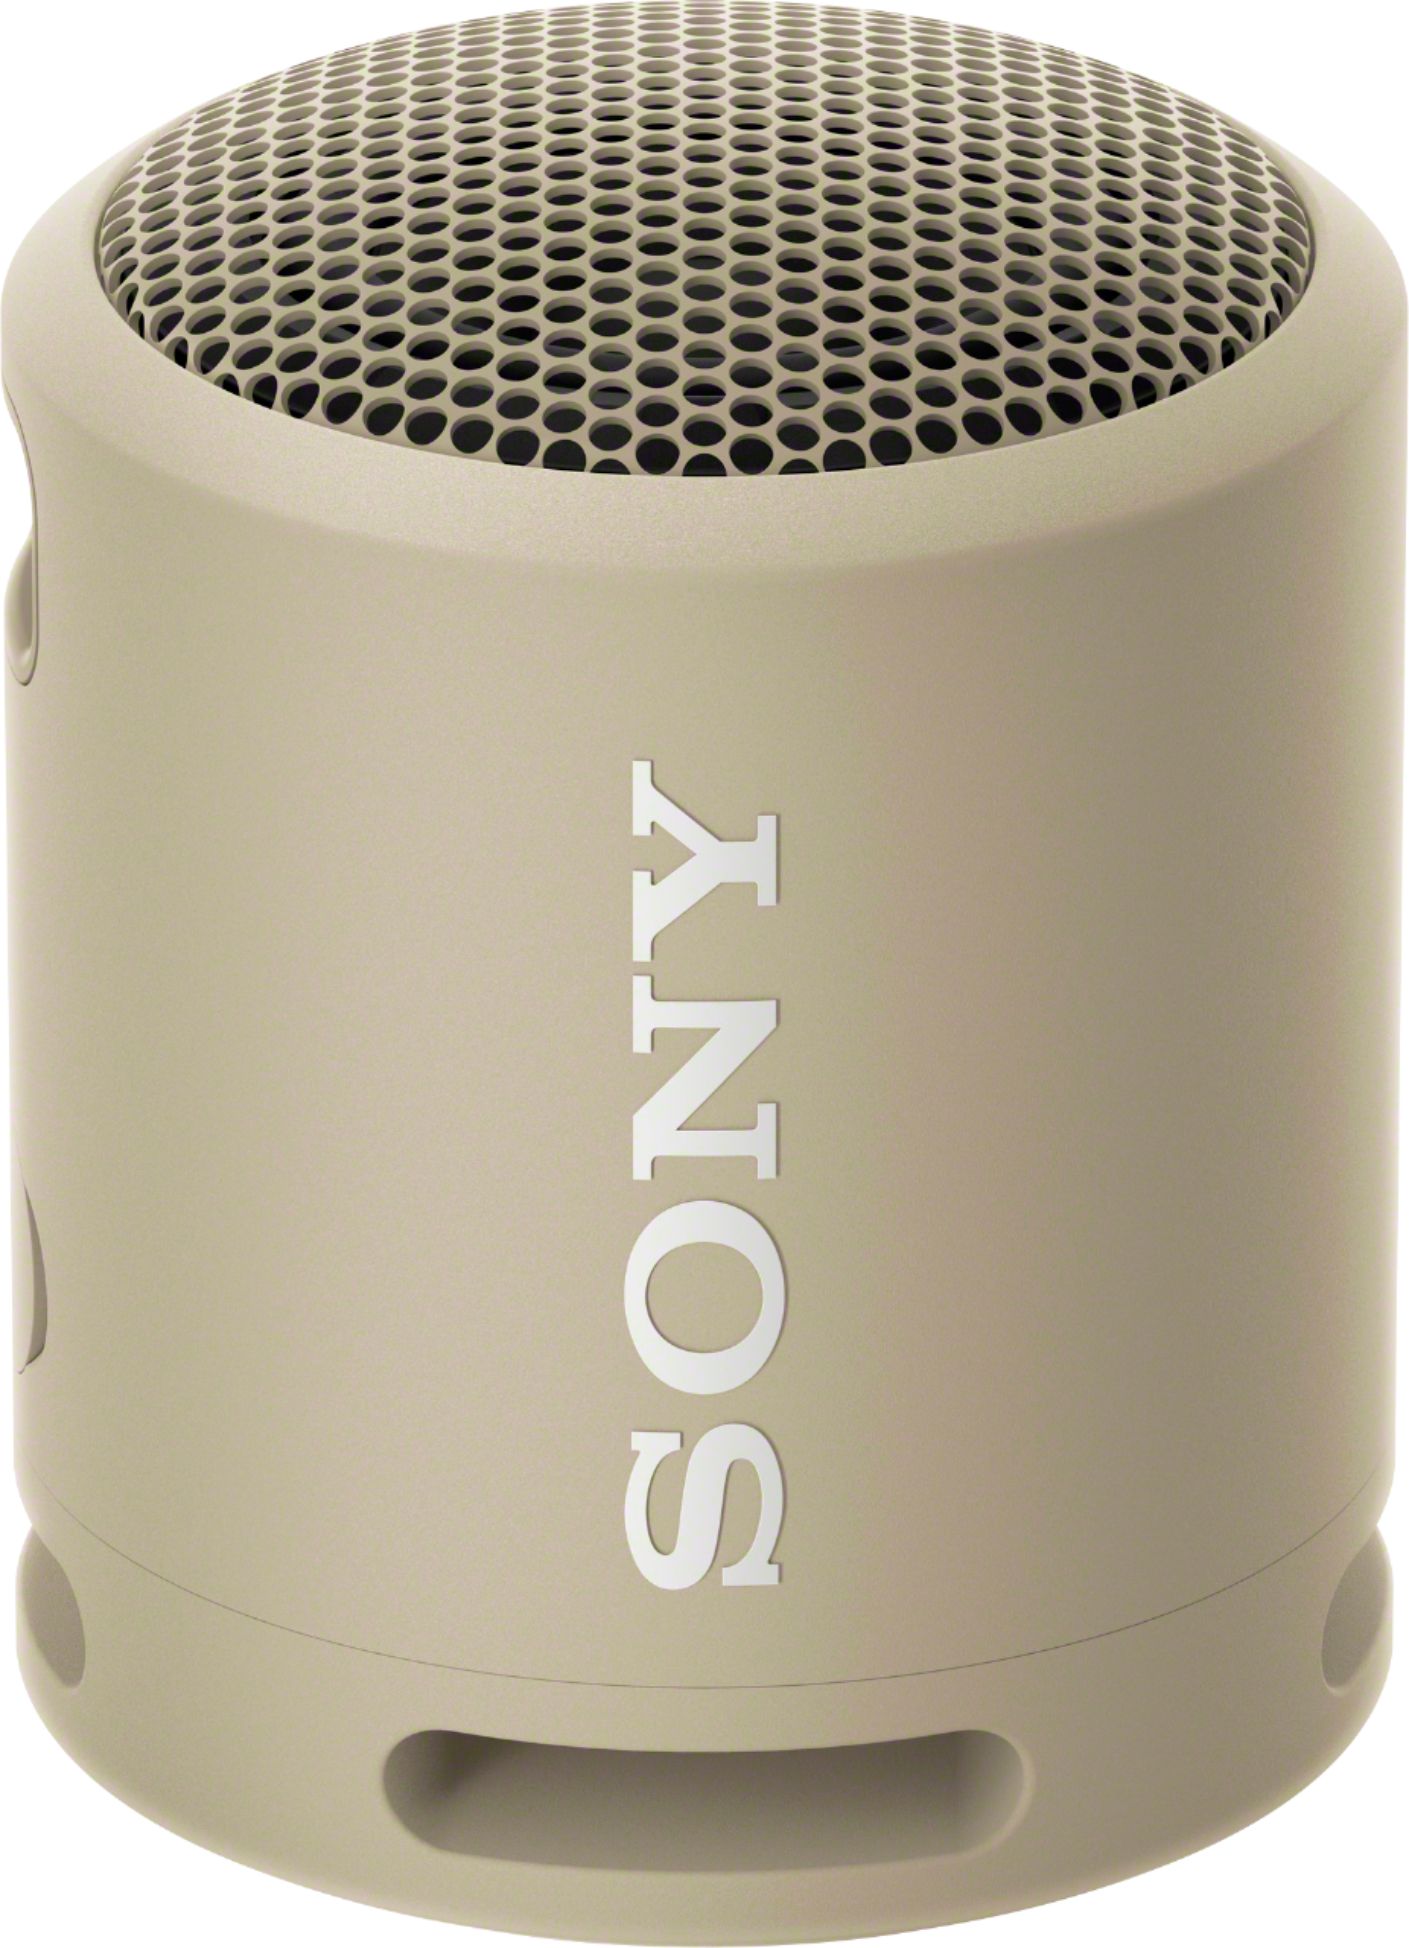 Sony SRSXB13/C XB13 EXTRA BASS Portable Wireless Bluetooth Speaker Light  Taupe 2 Pack